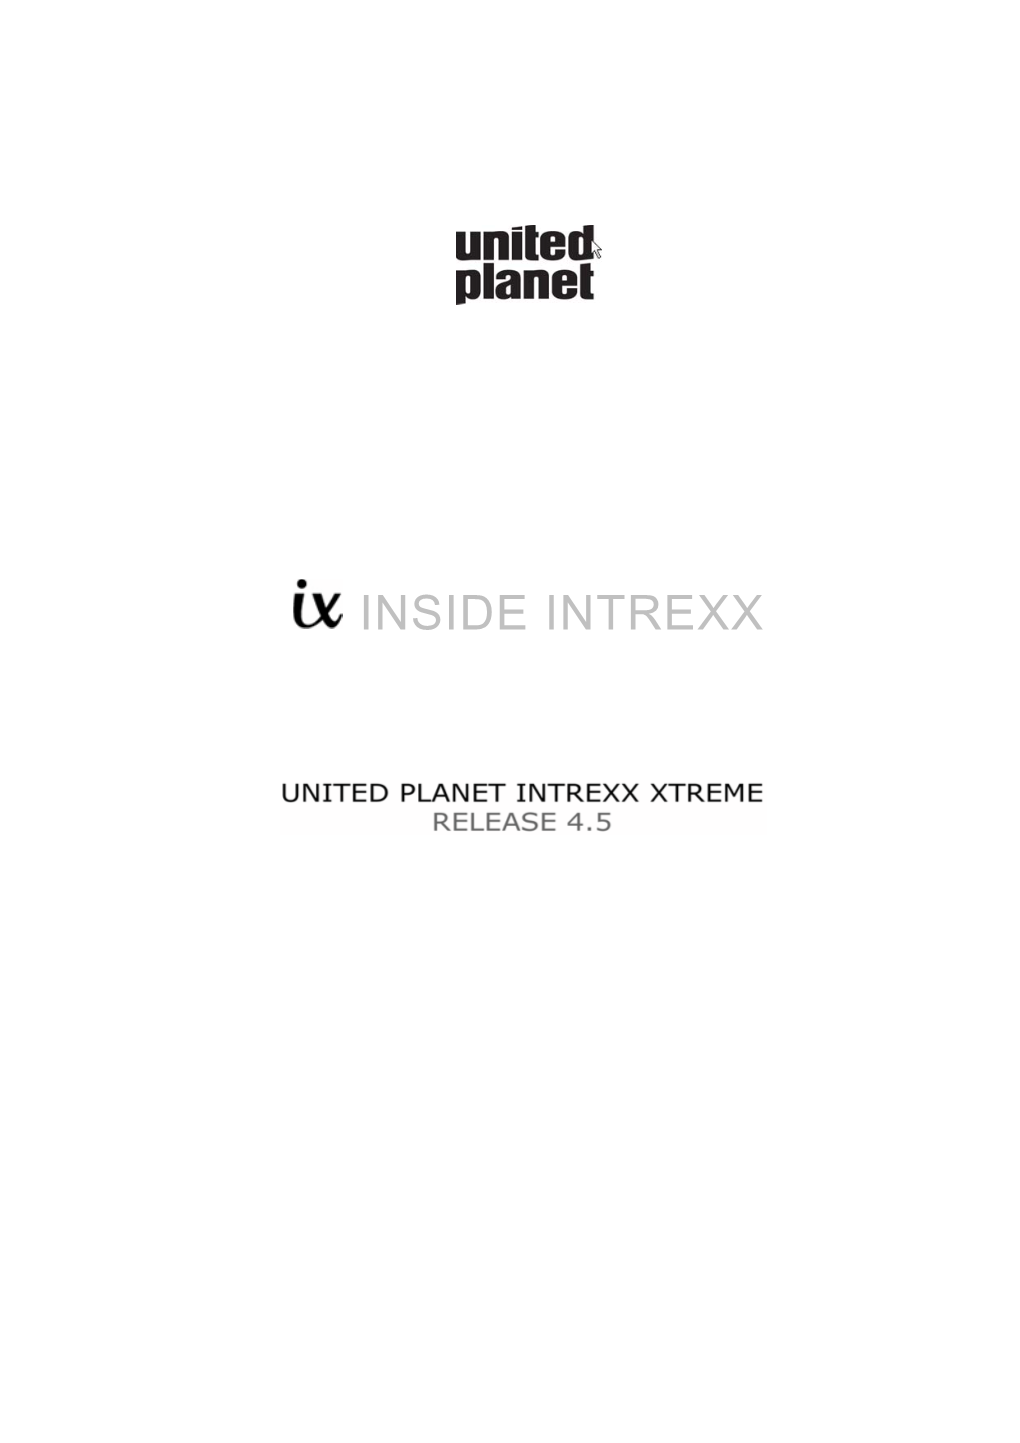 Inside Intrexx